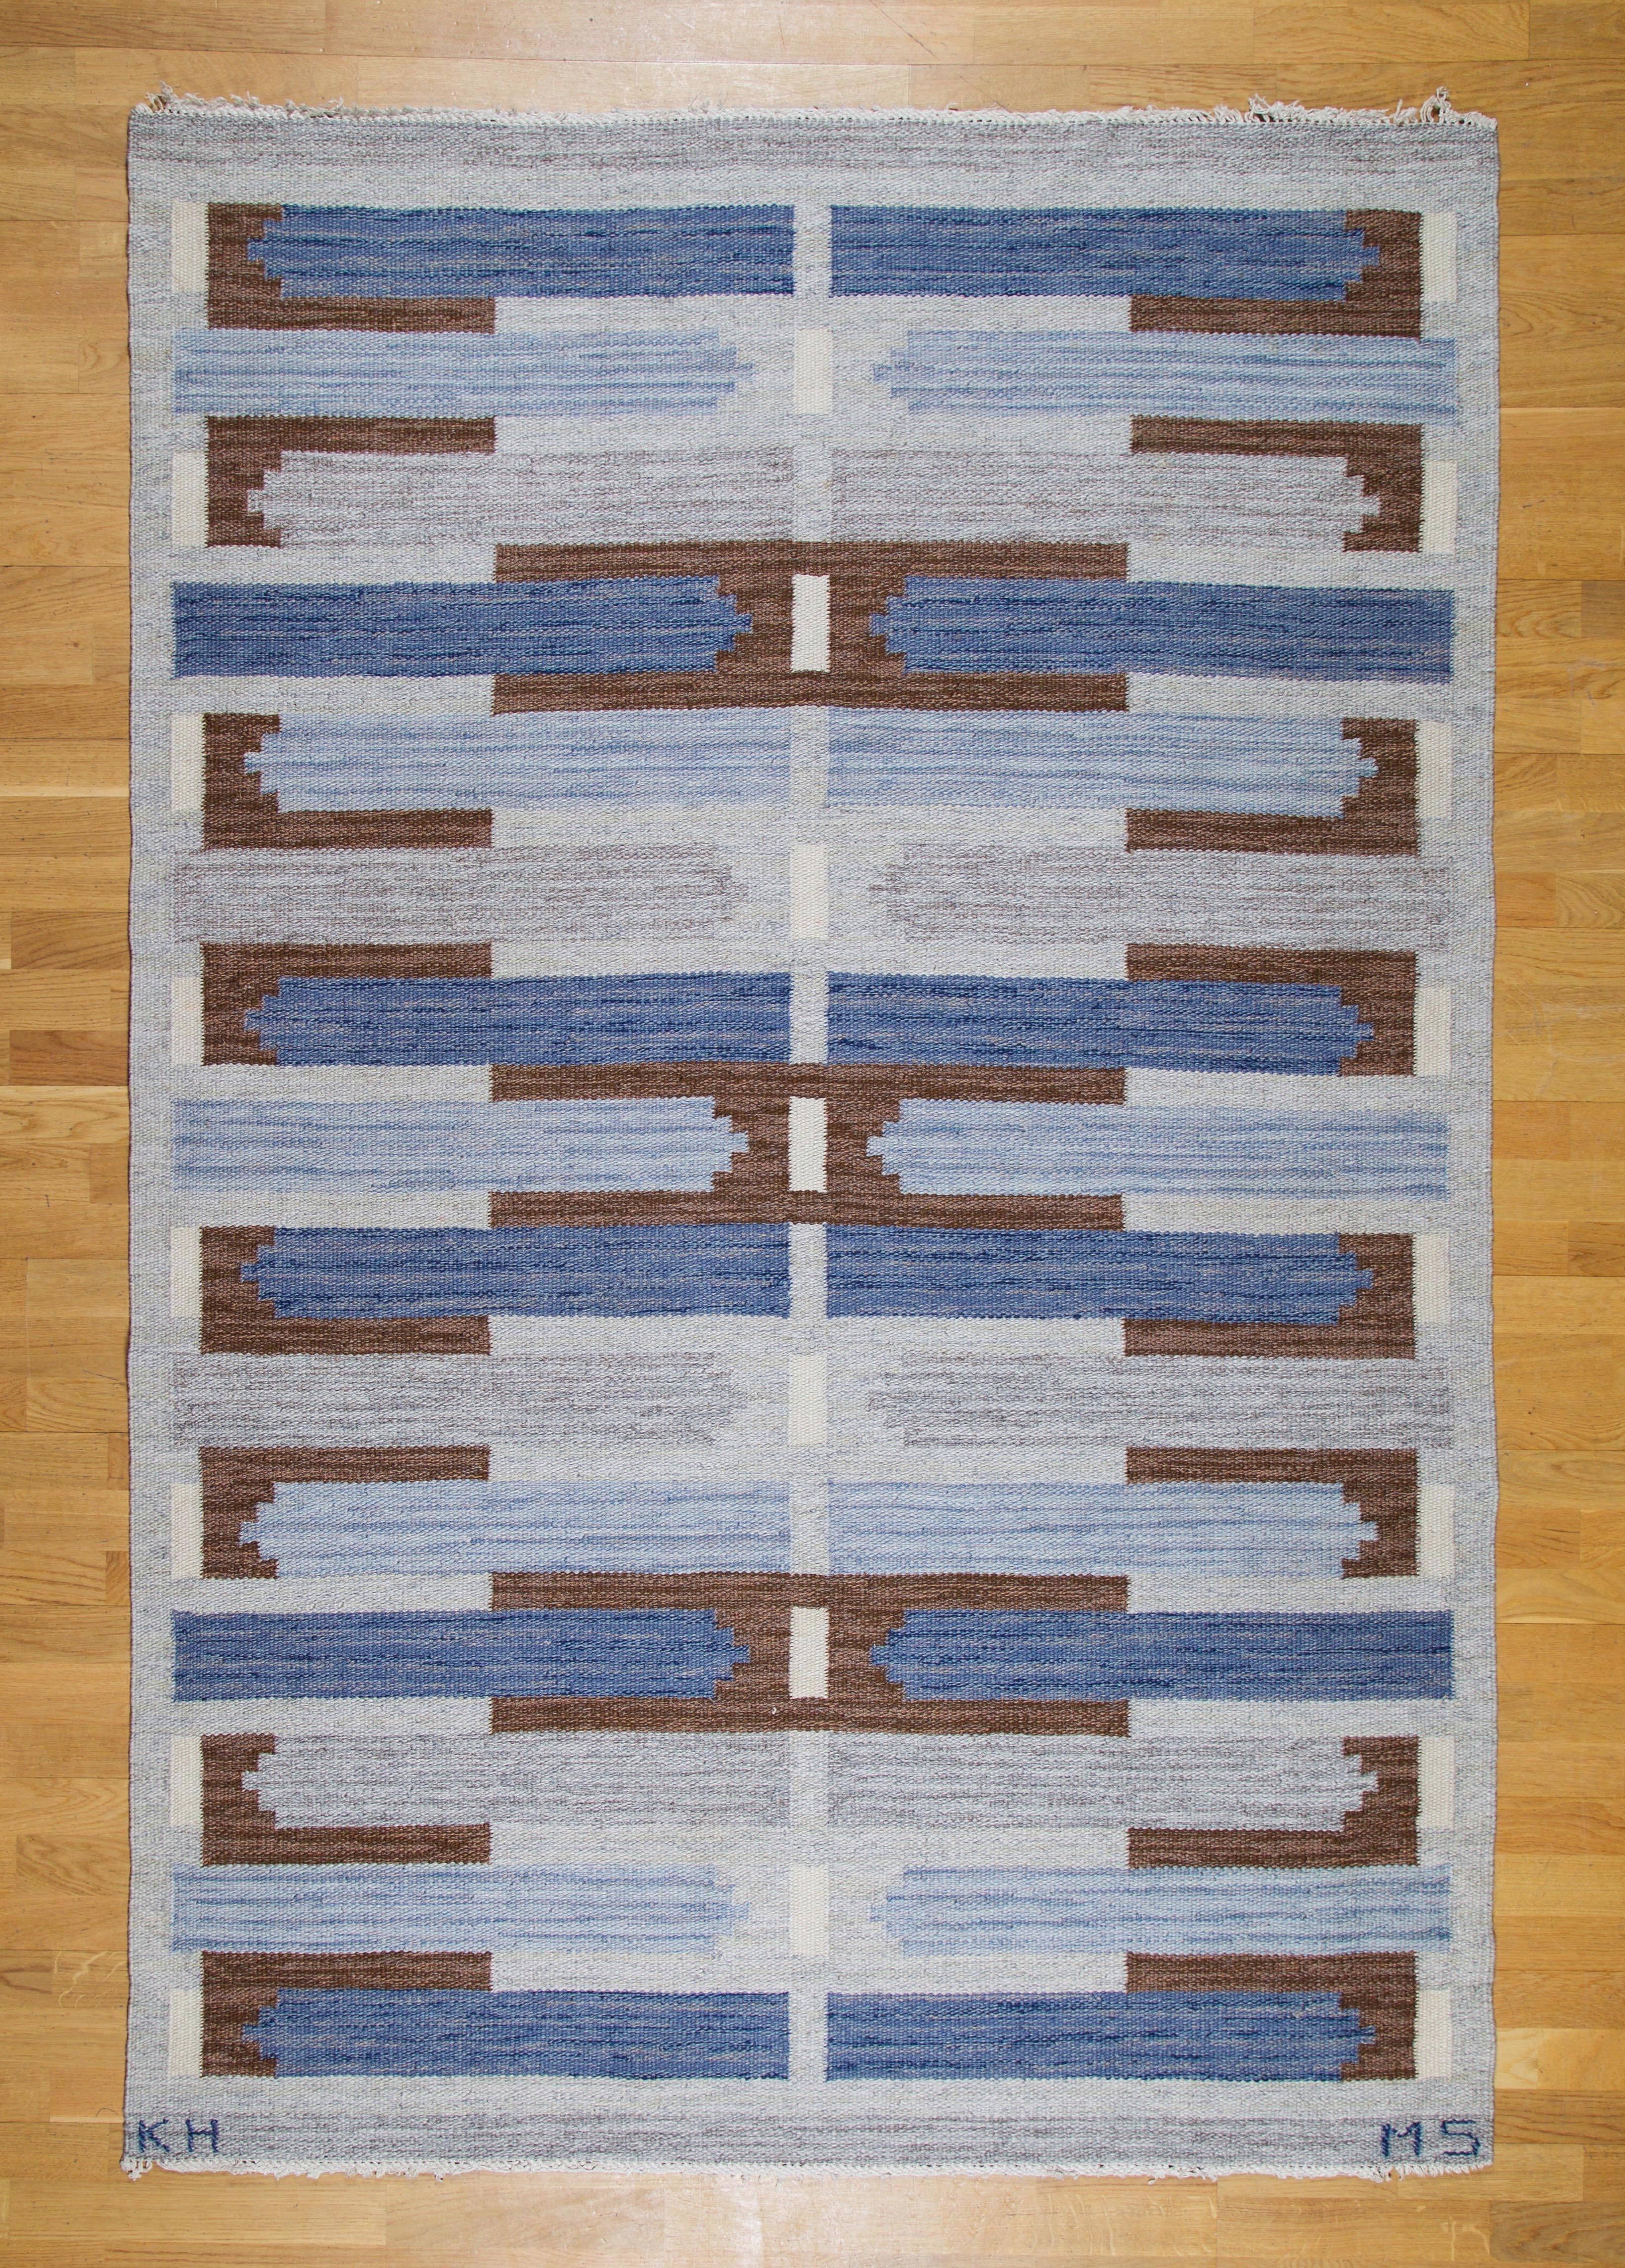 Mary Sandberg.

Flat-weave rug.

Klockargårdens Hemslöjd, Sweden, circa 1960s.
Wool, linen warp. Blue, grey, brown, natural hues.
Length 223 x width 150 cm.
87.79 L x 59 W inches

Swedish flat-woven rug by Mary Sandberg, circa1960s.